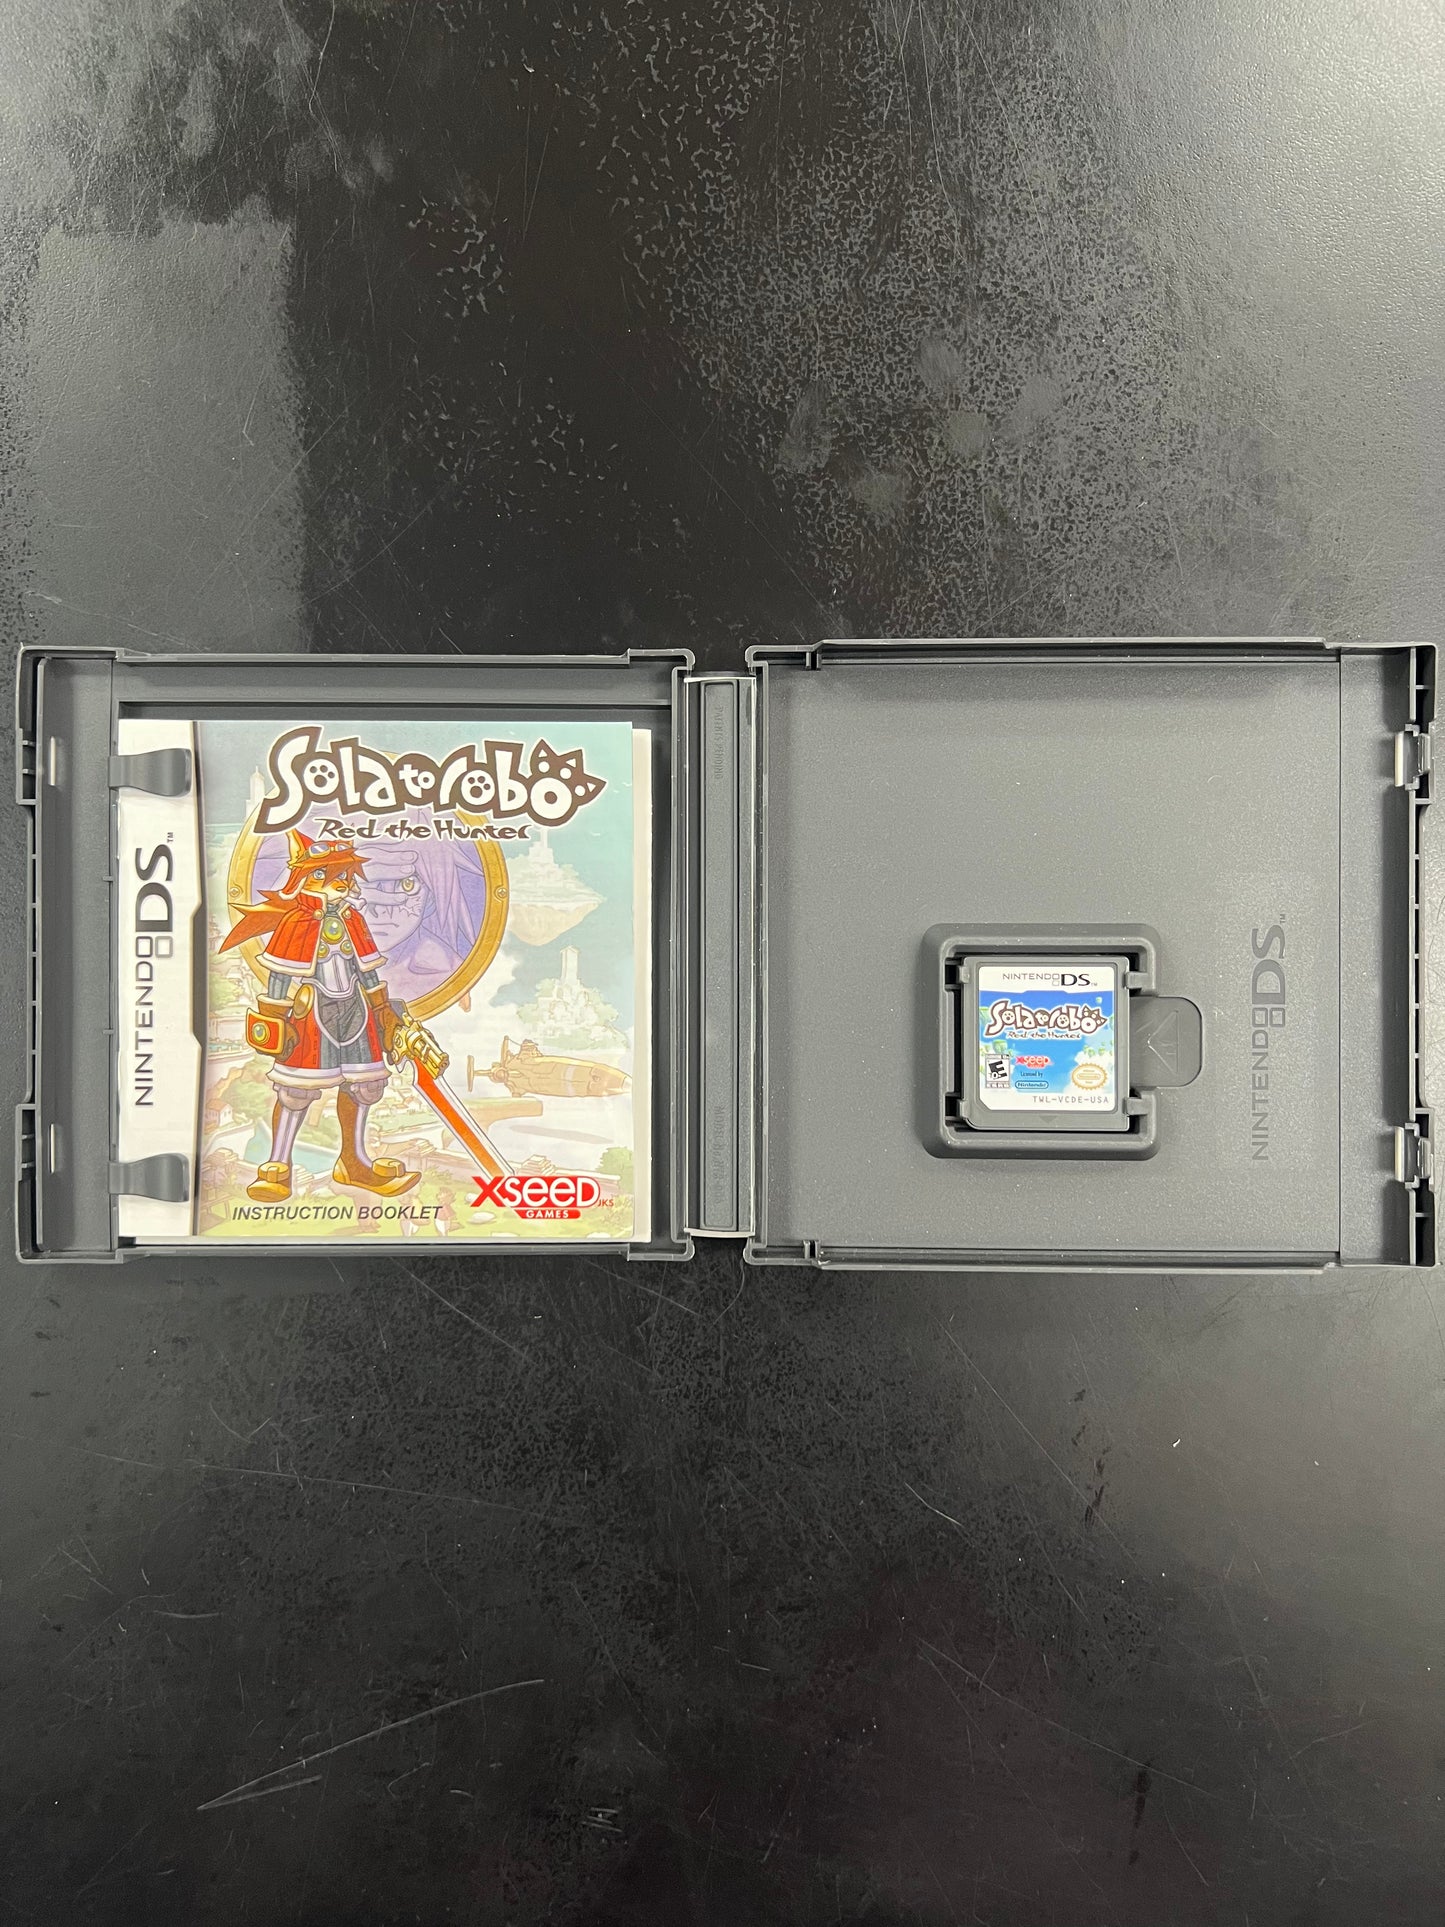 Solatorobo: Red The Hunter - Nintendo DS